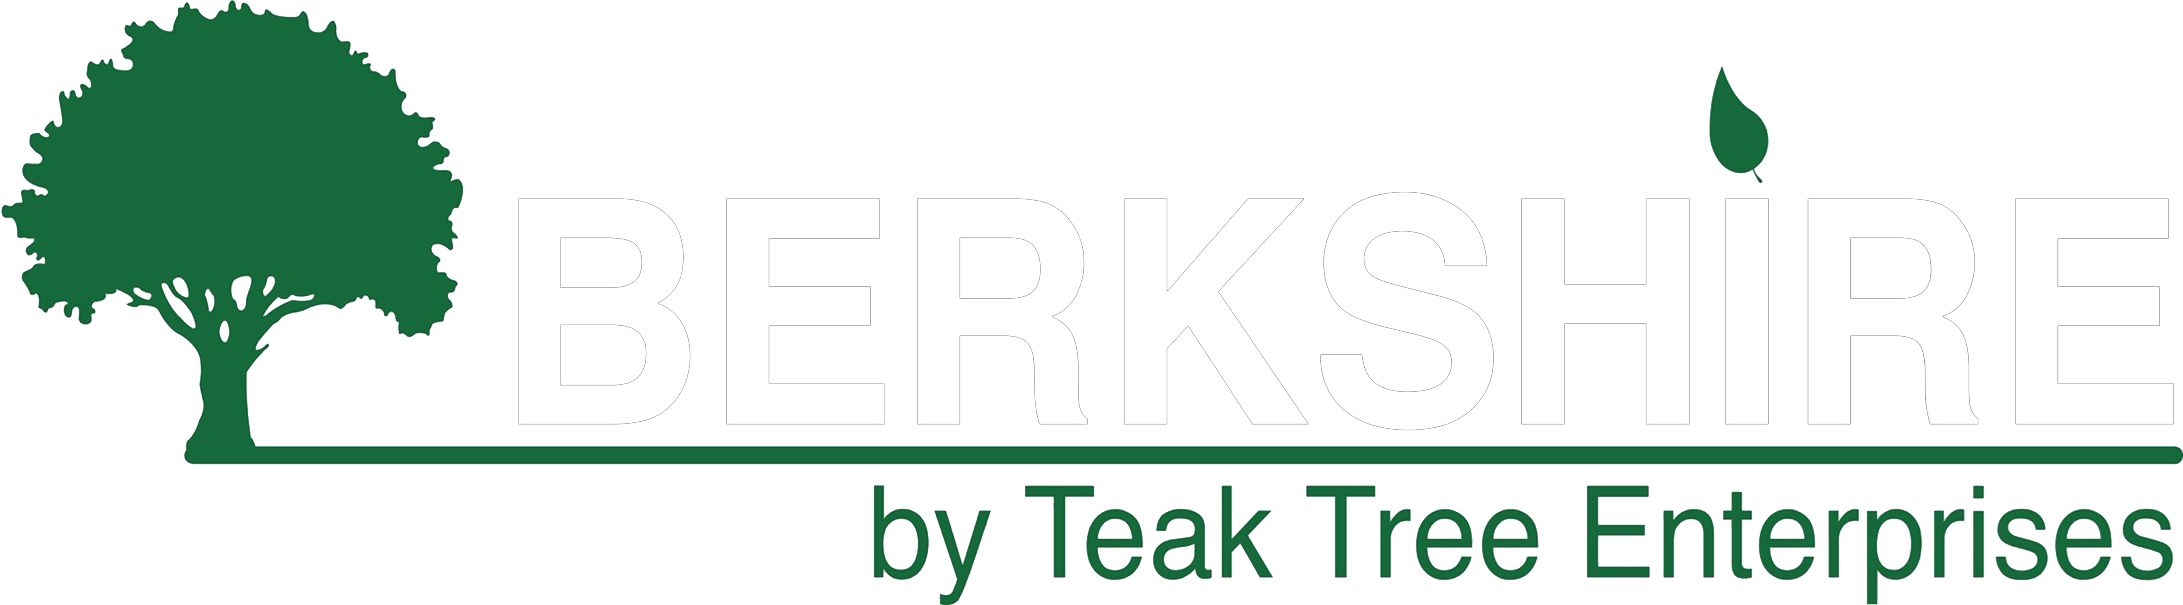 Berkshire and Teak Tree Enterprises